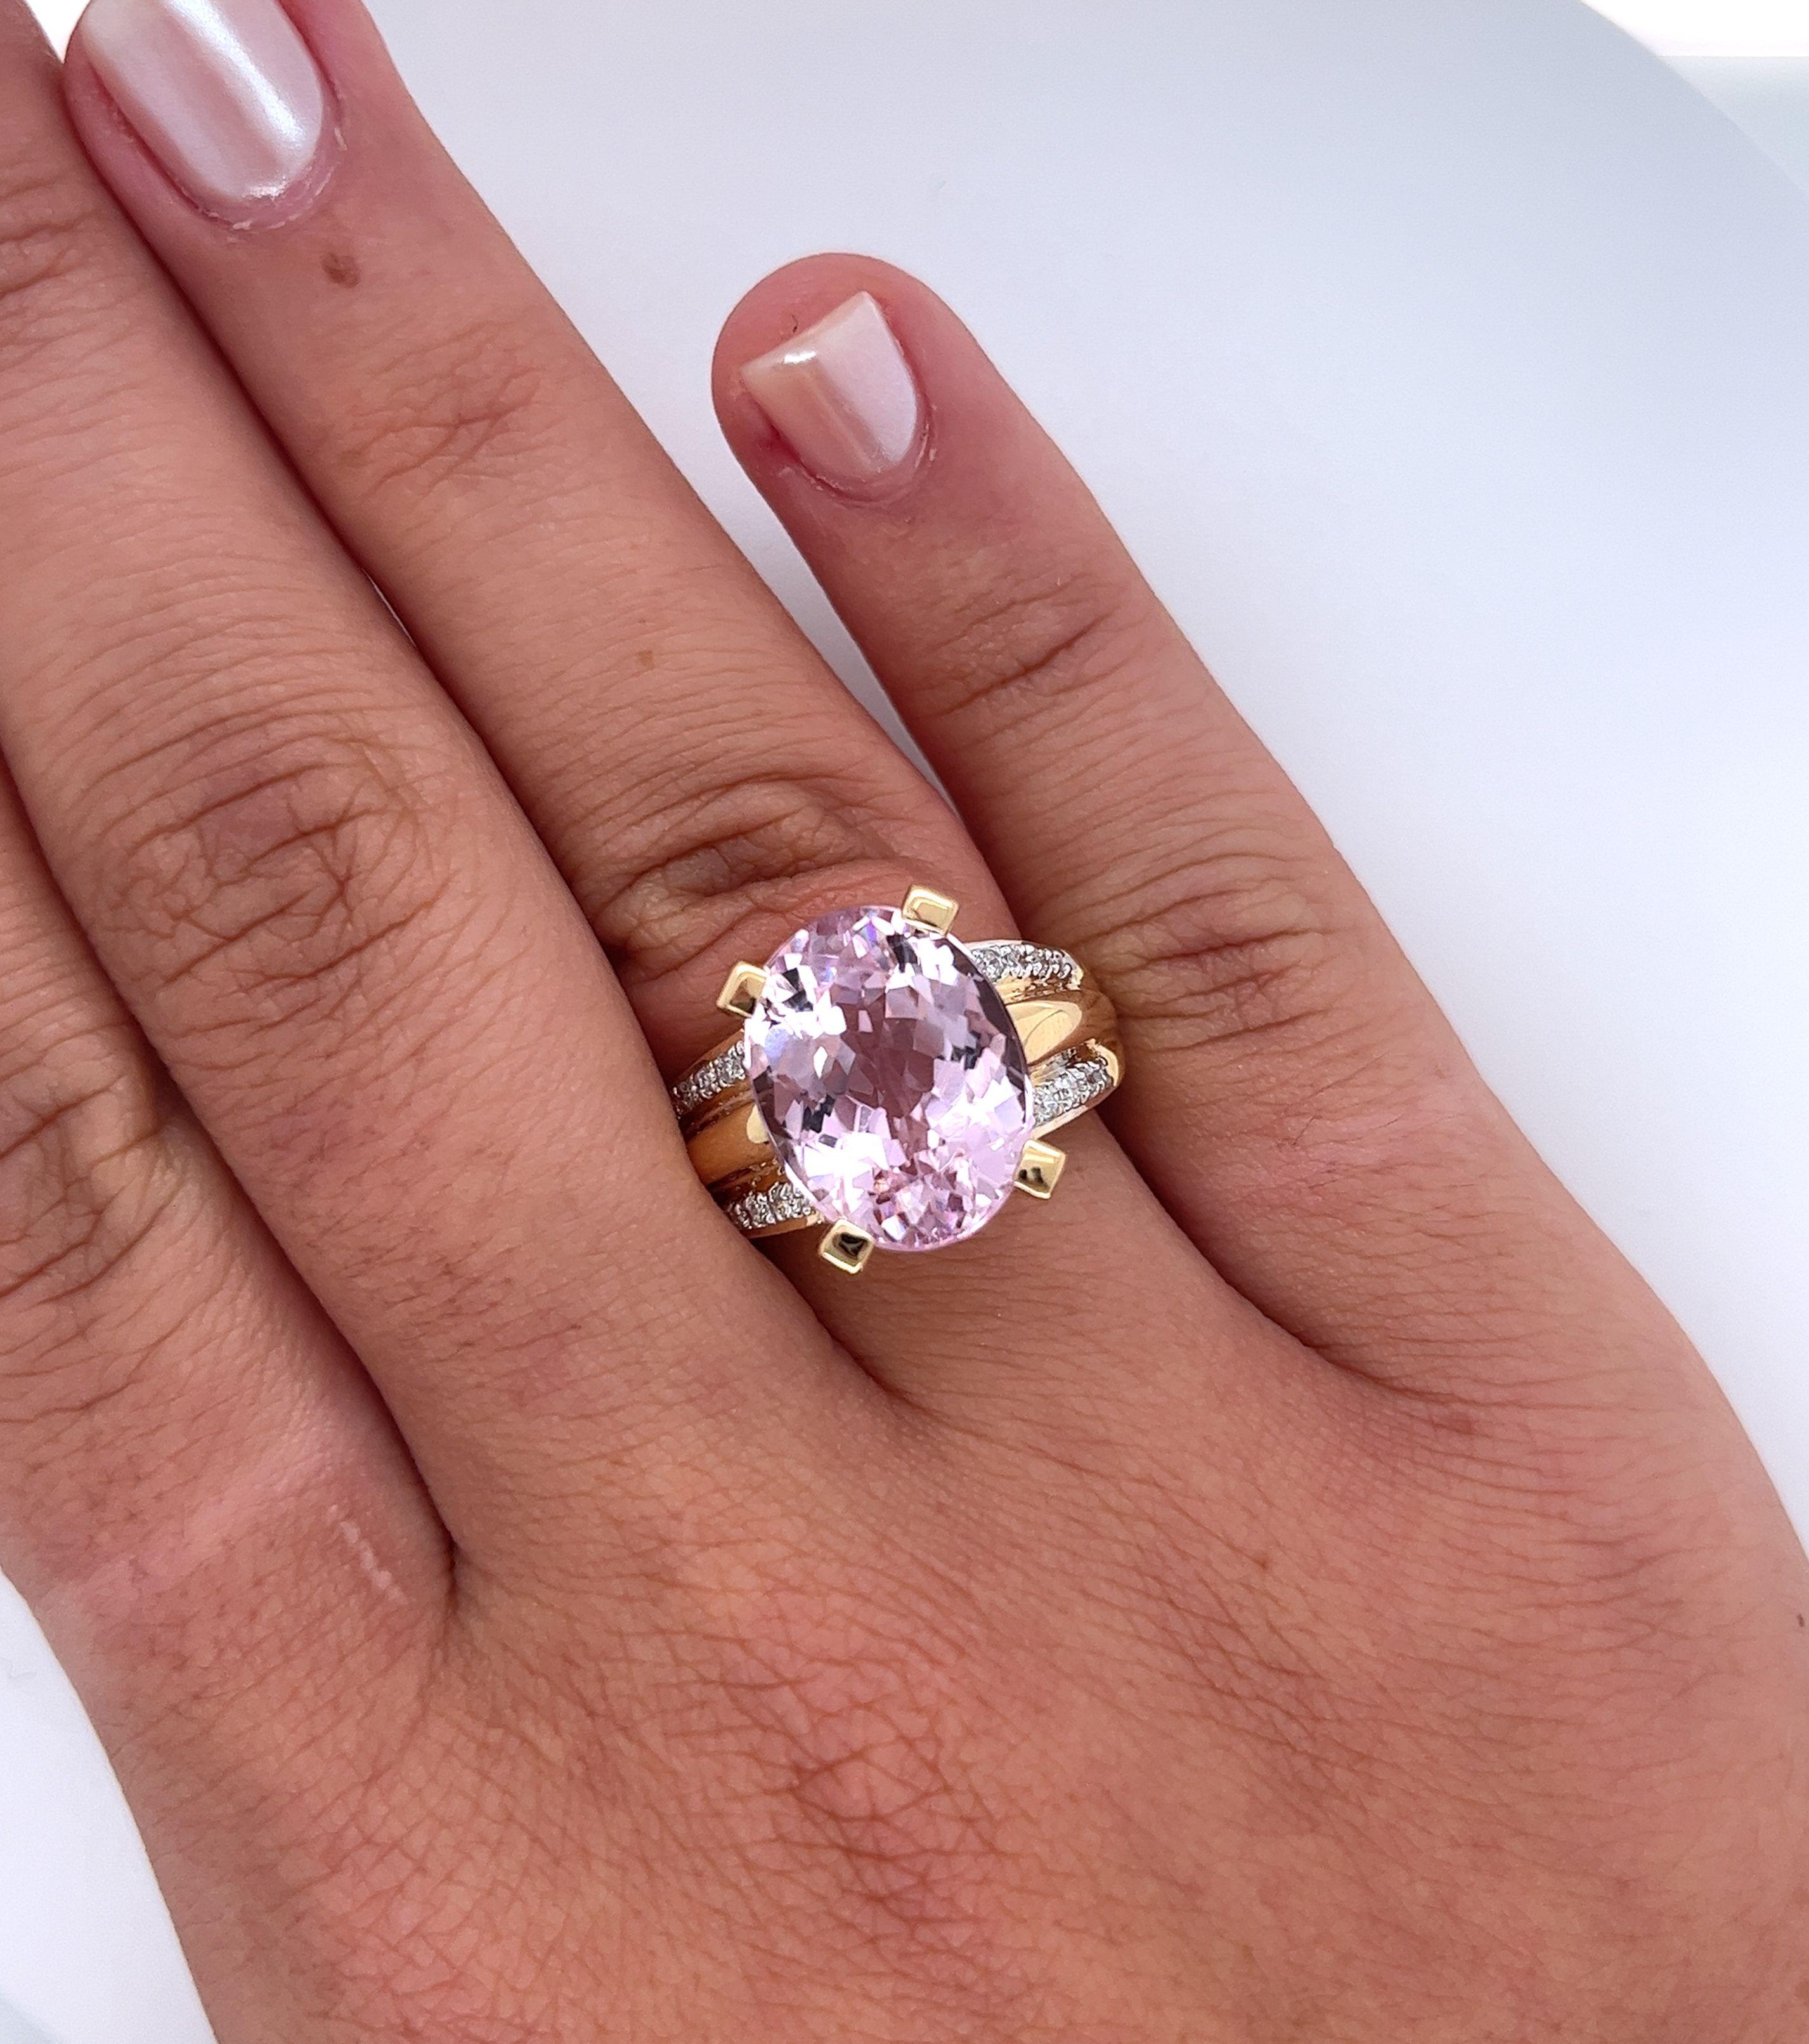 9.5 carat diamond ring